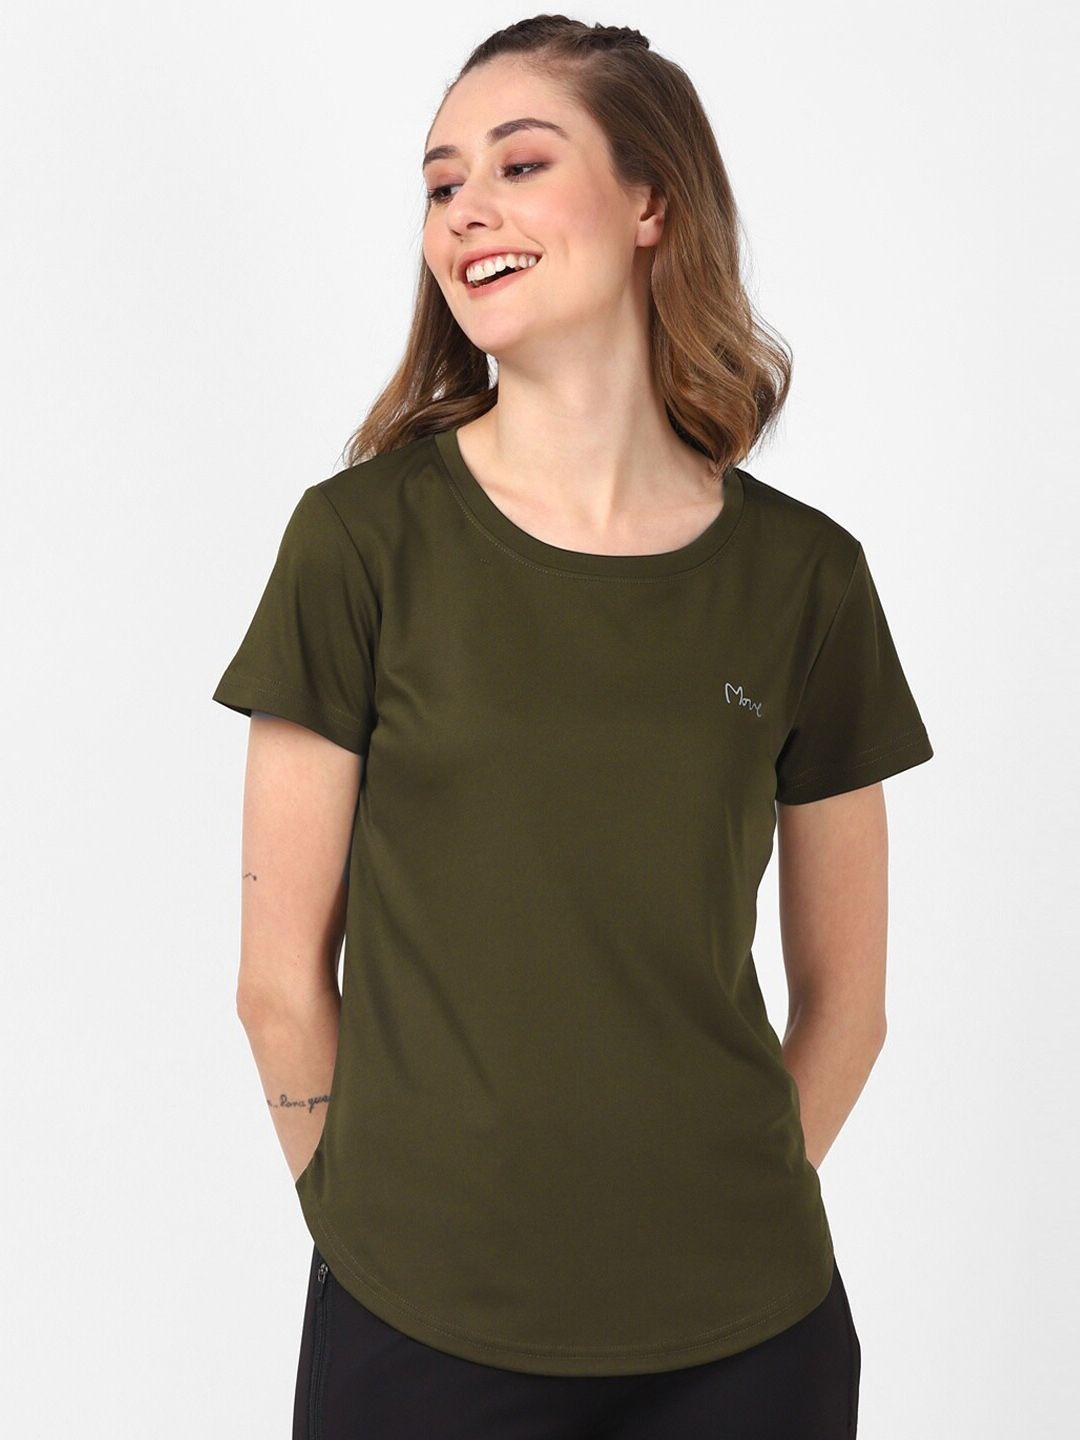 urbanmark-women-olive-green-cut-outs-t-shirt